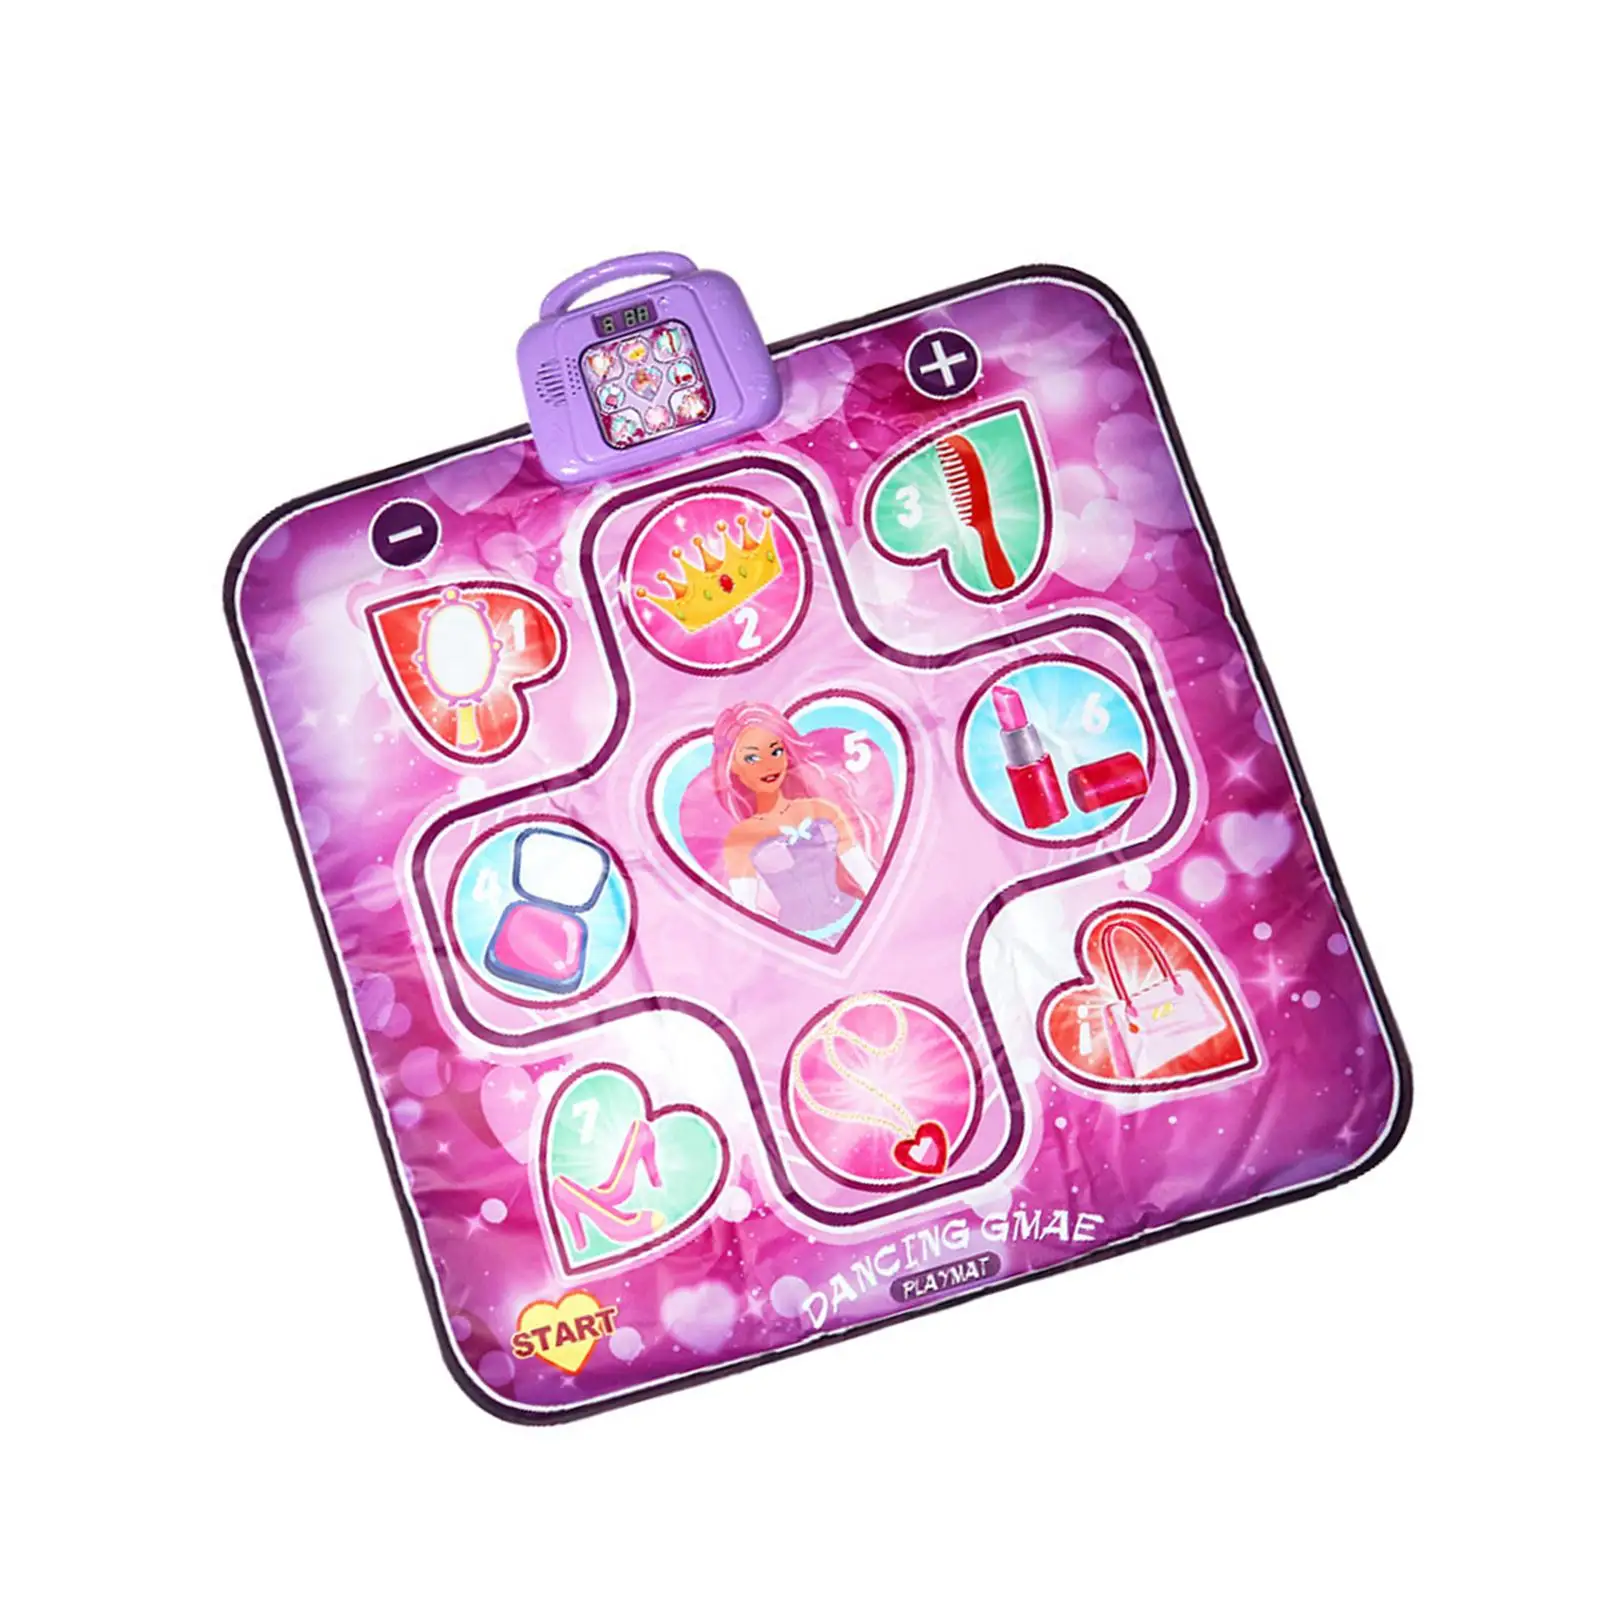 Dancing Game Playmat Portable Electronic Music Dance Pad for Girls Boys Kids